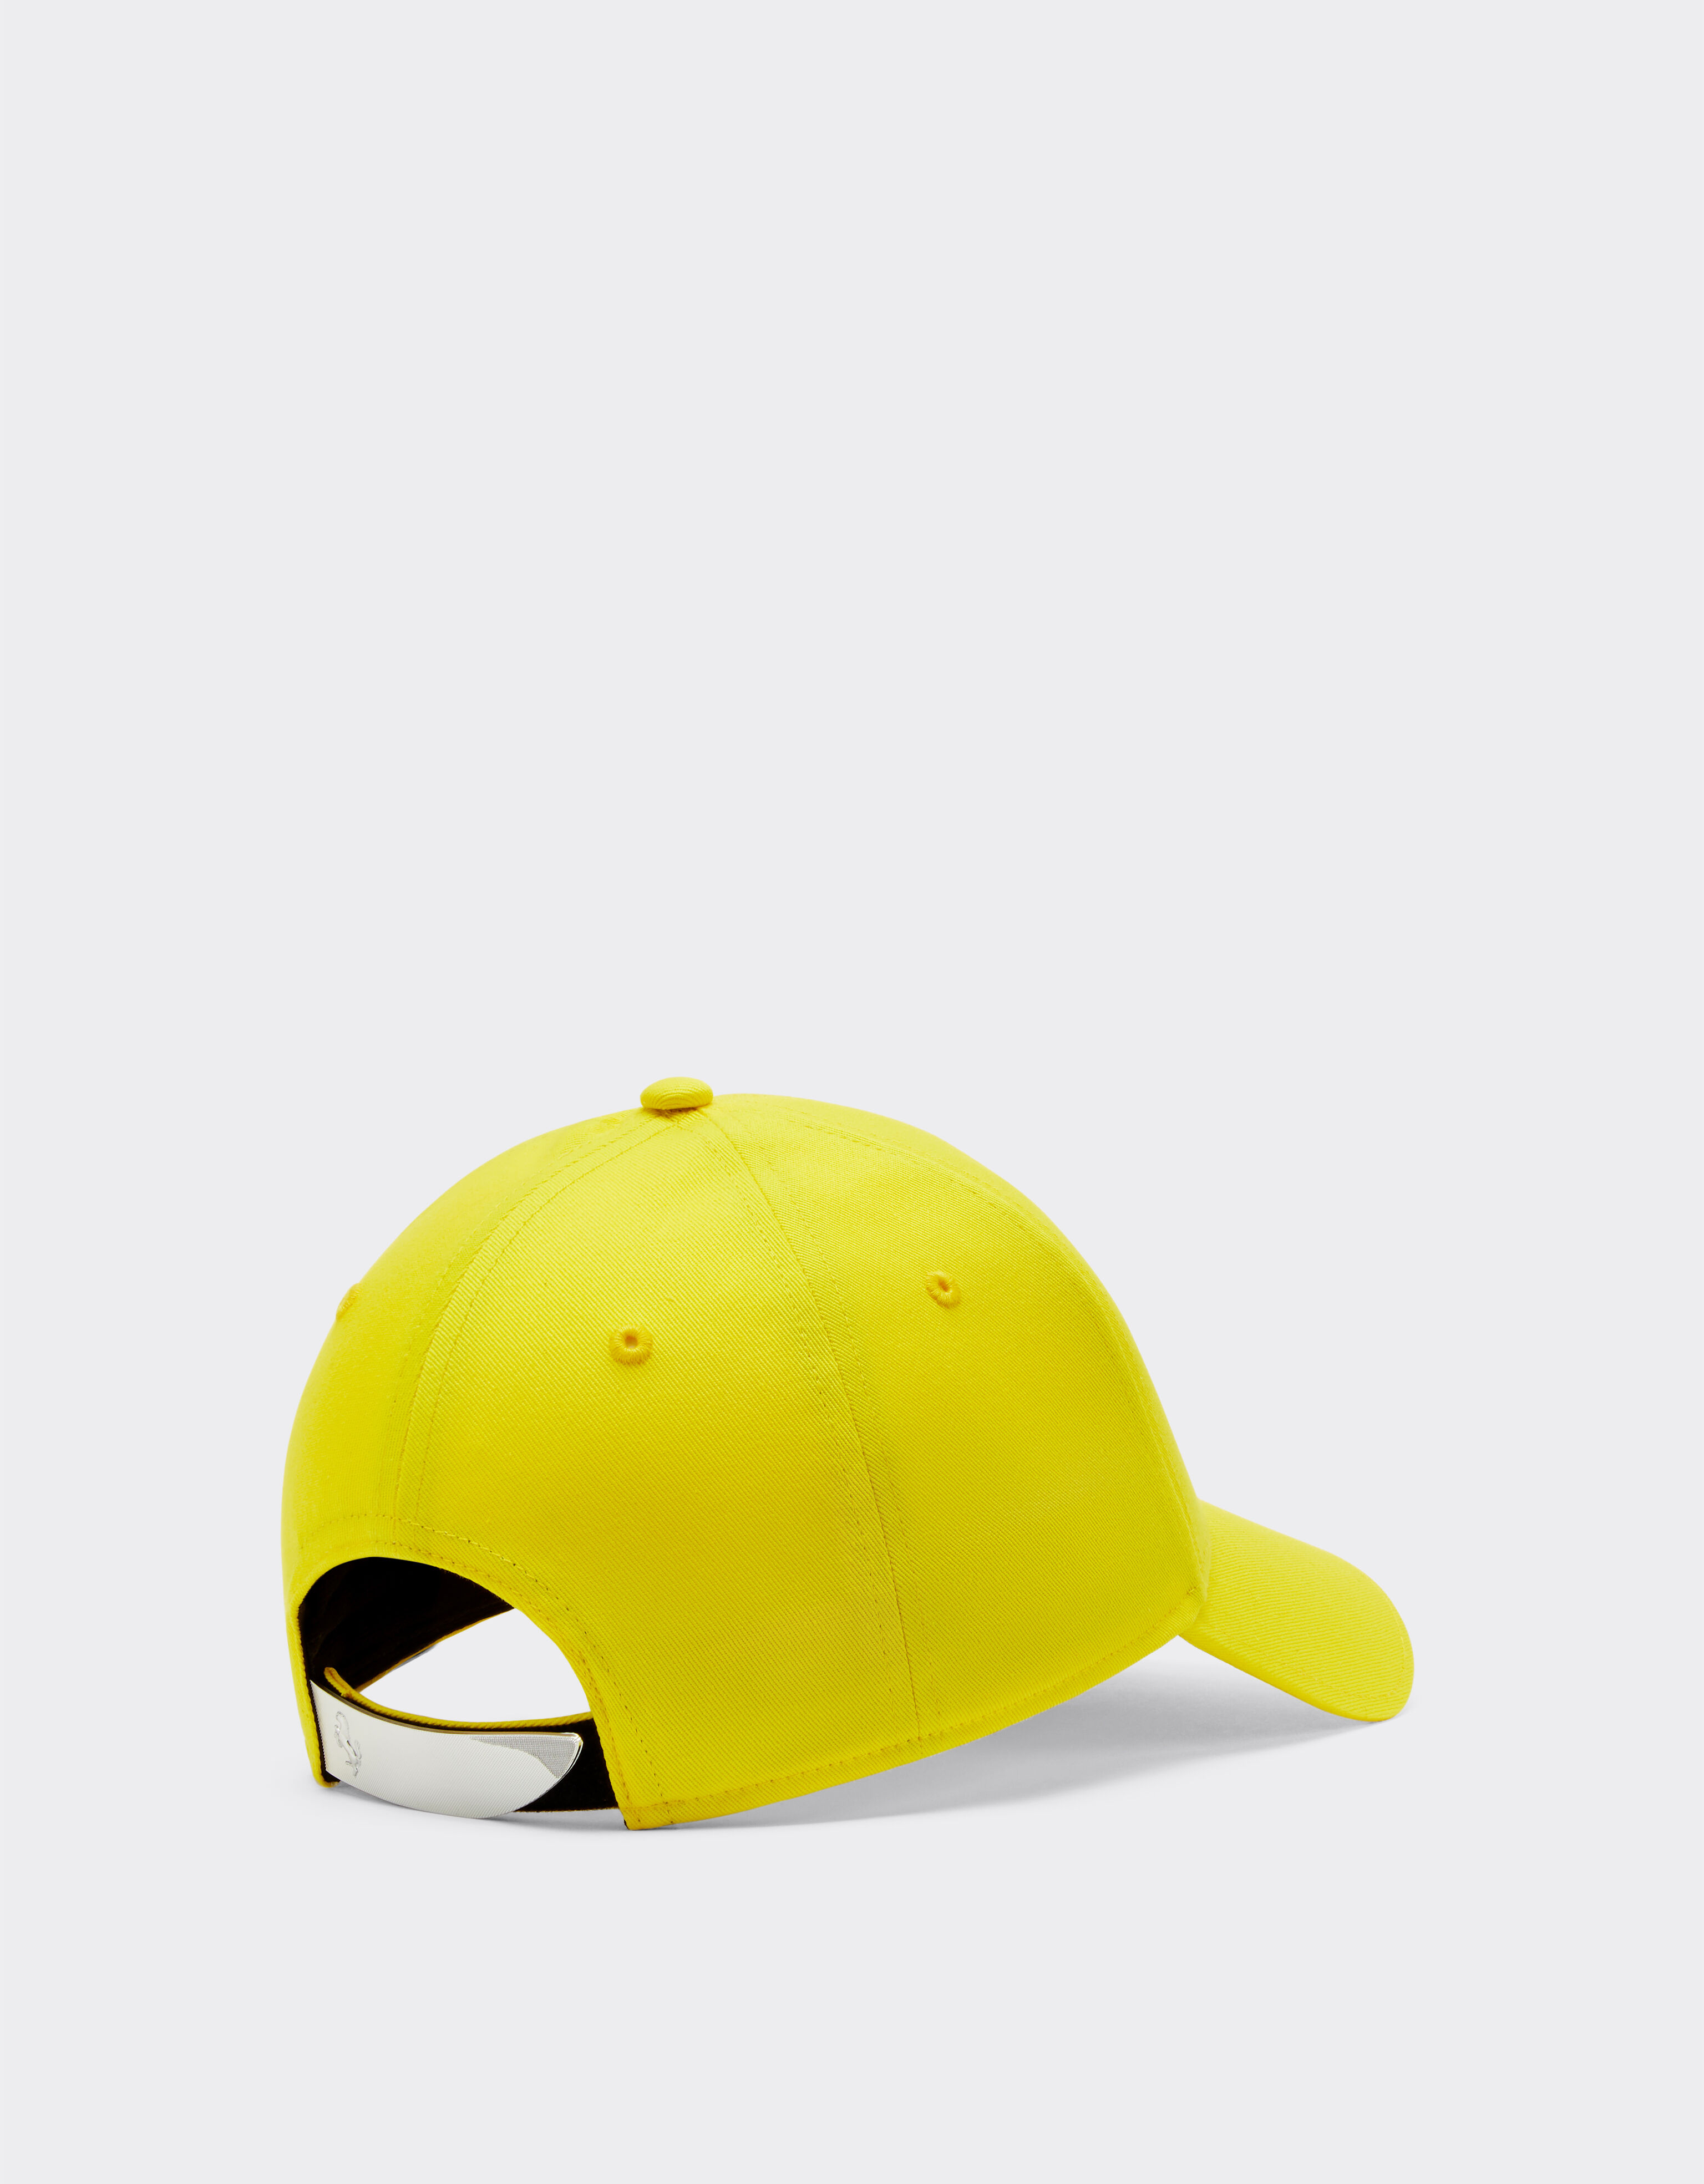 Ferrari Baseball hat with rubberised logo Giallo Modena 20403f